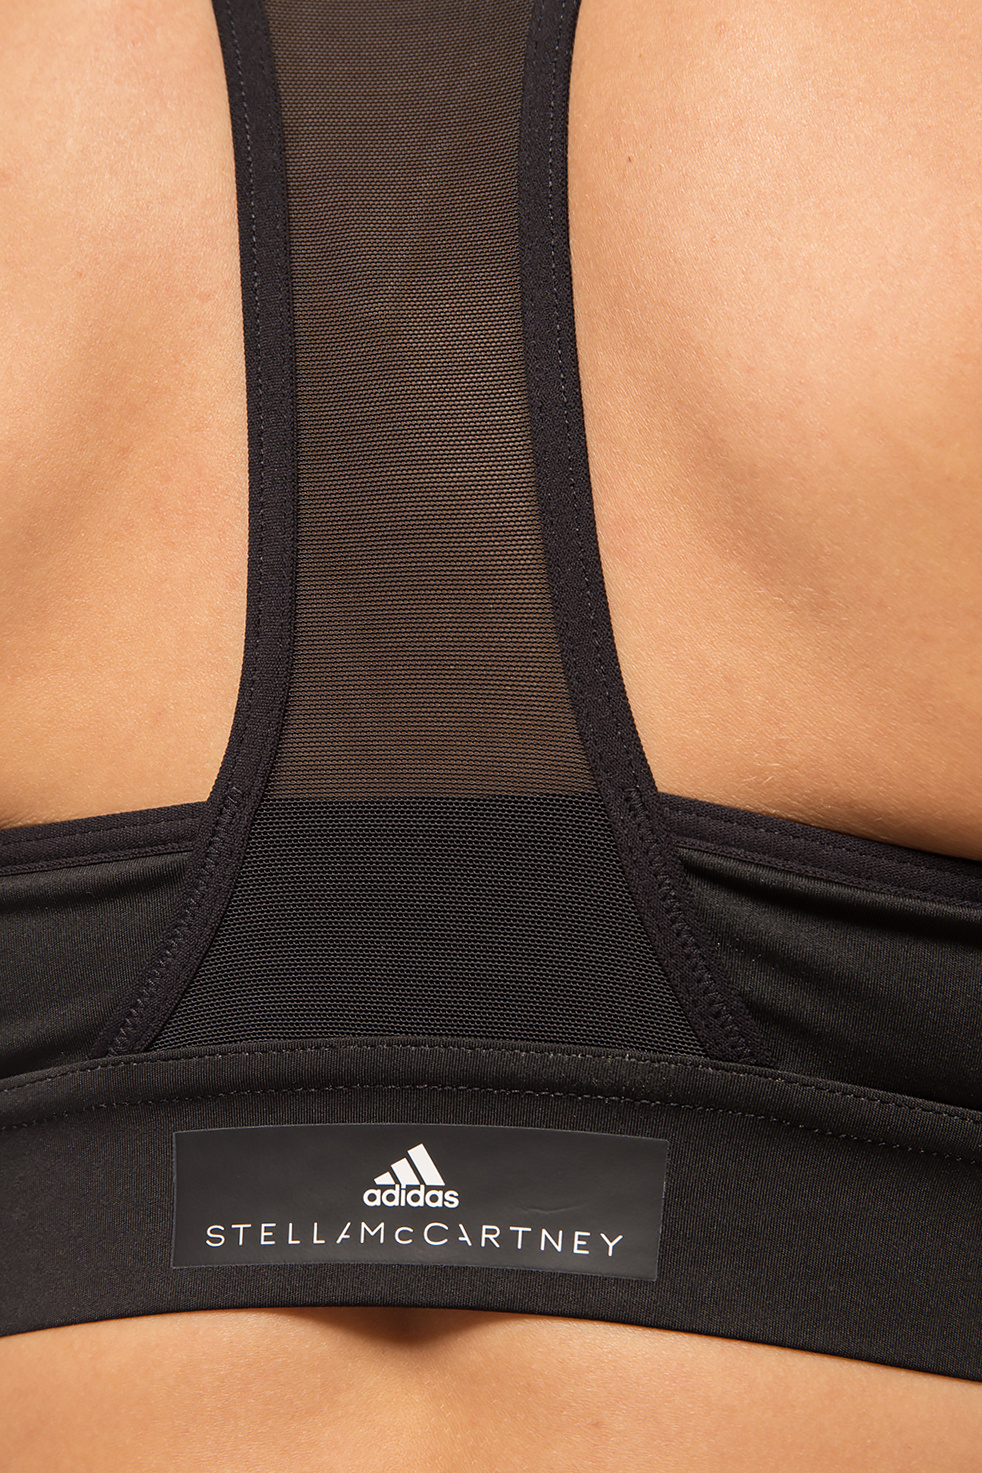 ADIDAS by Stella McCartney Branded sports bra